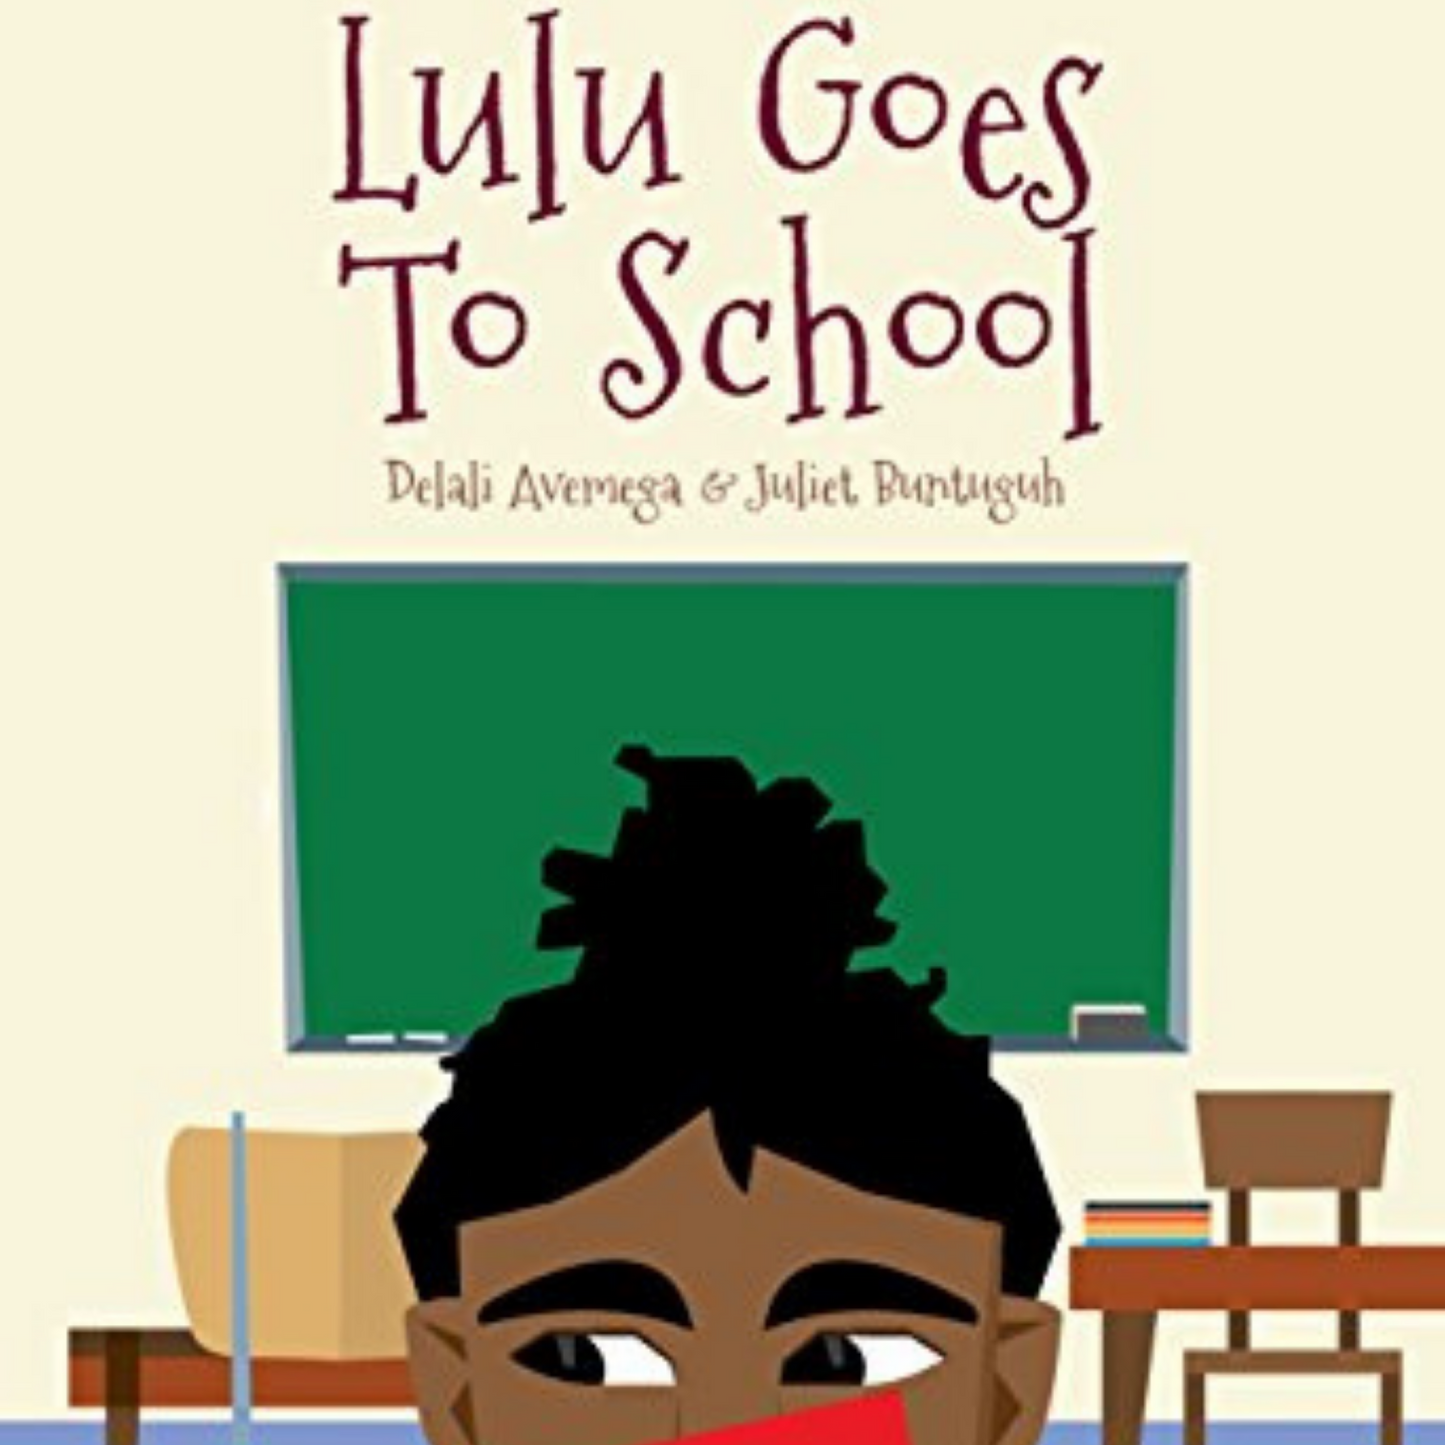 Lulu goes to school